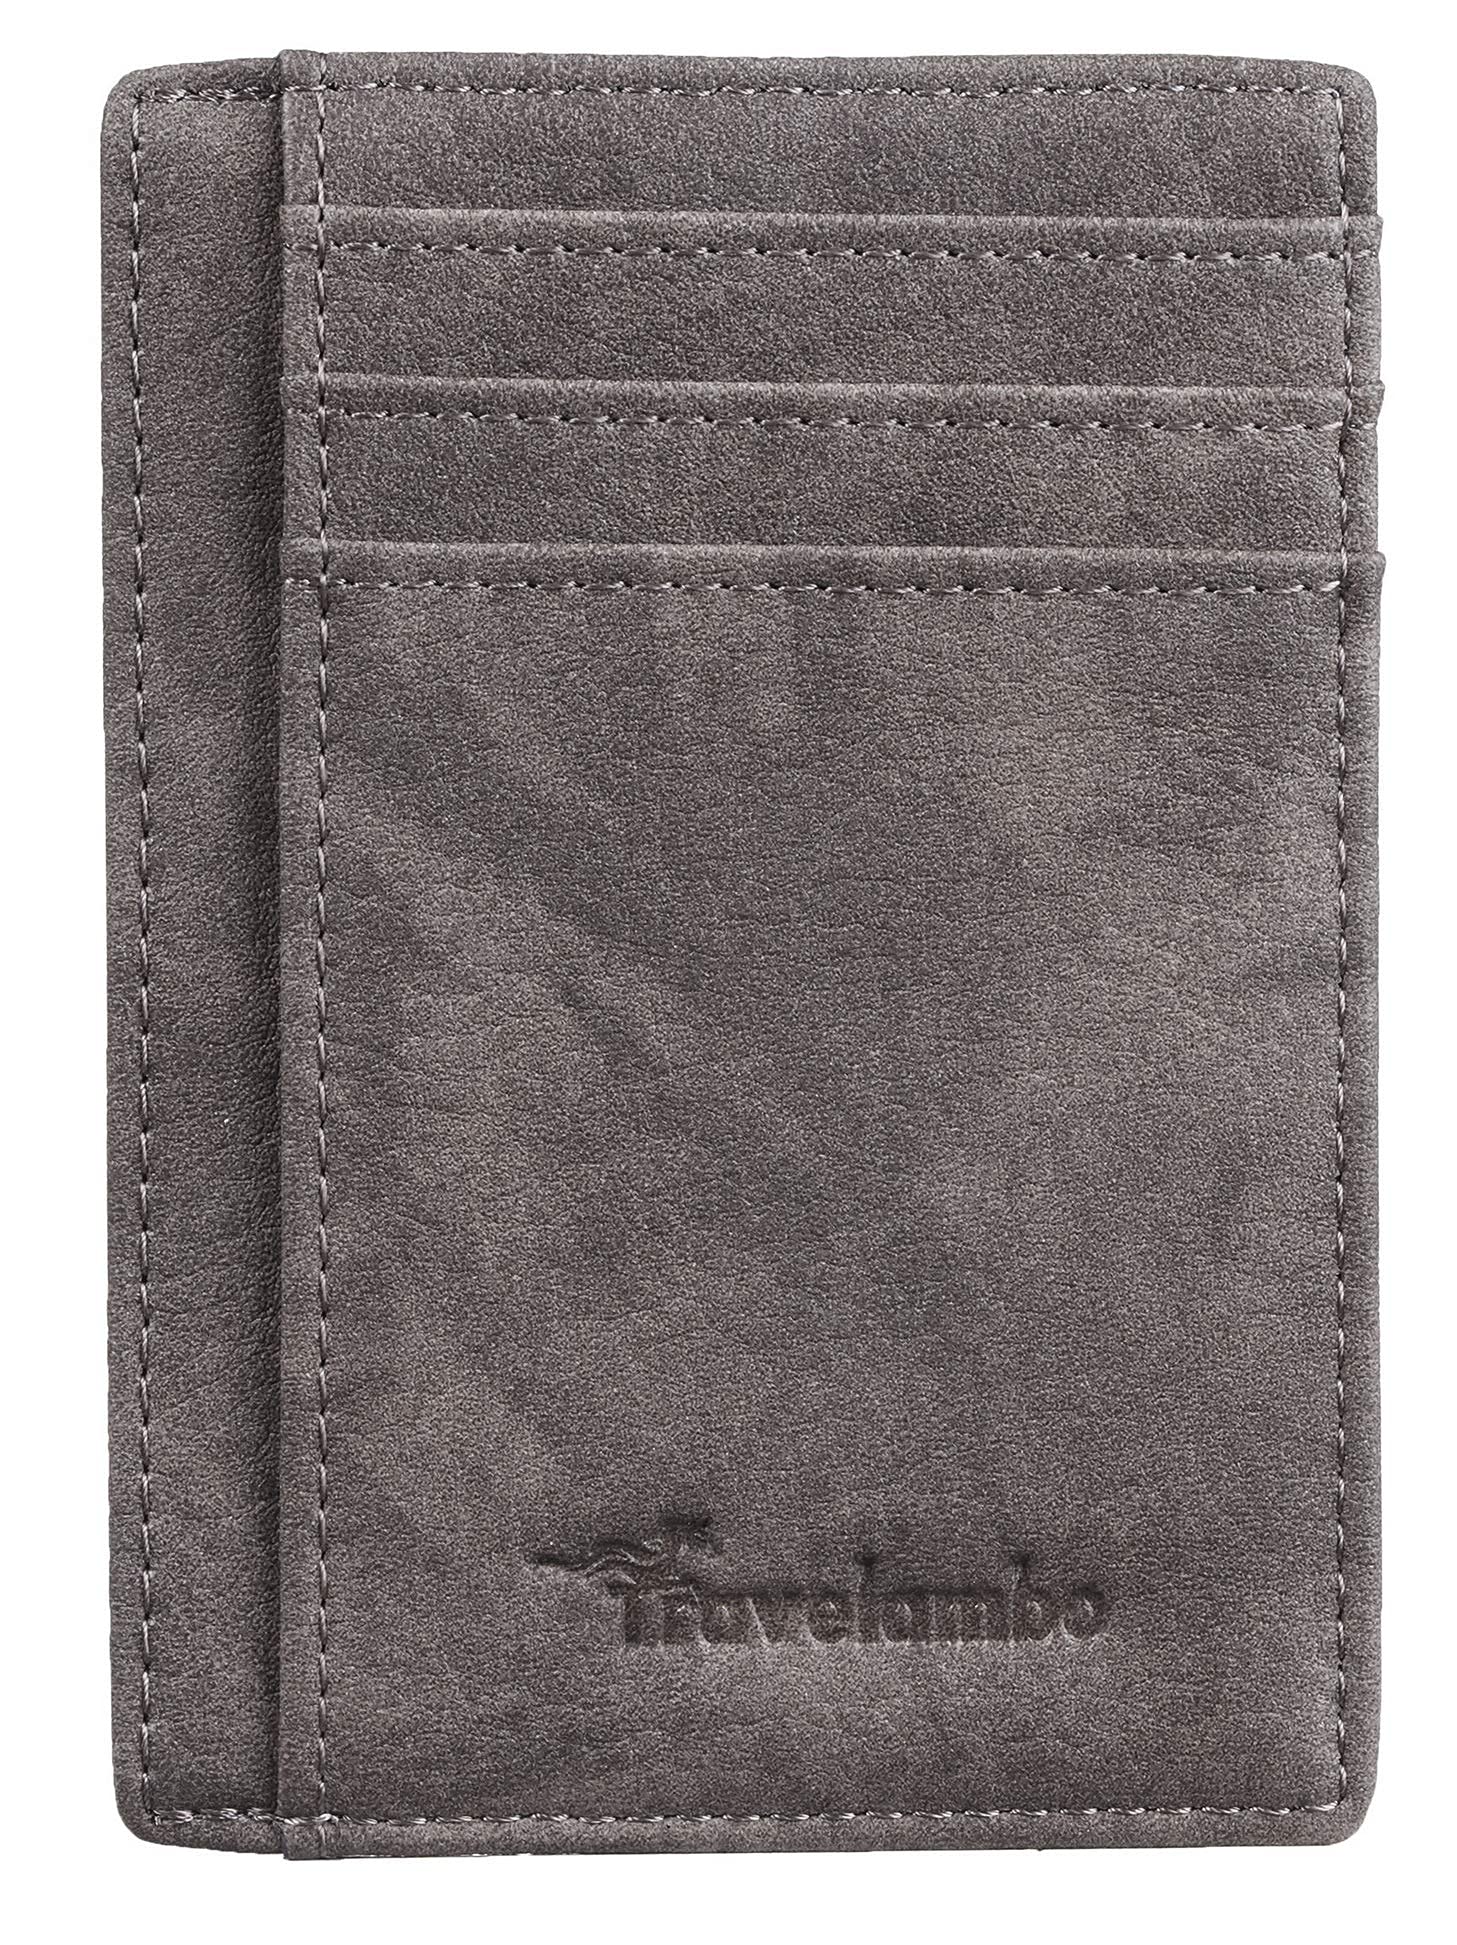 Travelambo Front Pocket Minimalist Leather Slim Wallet